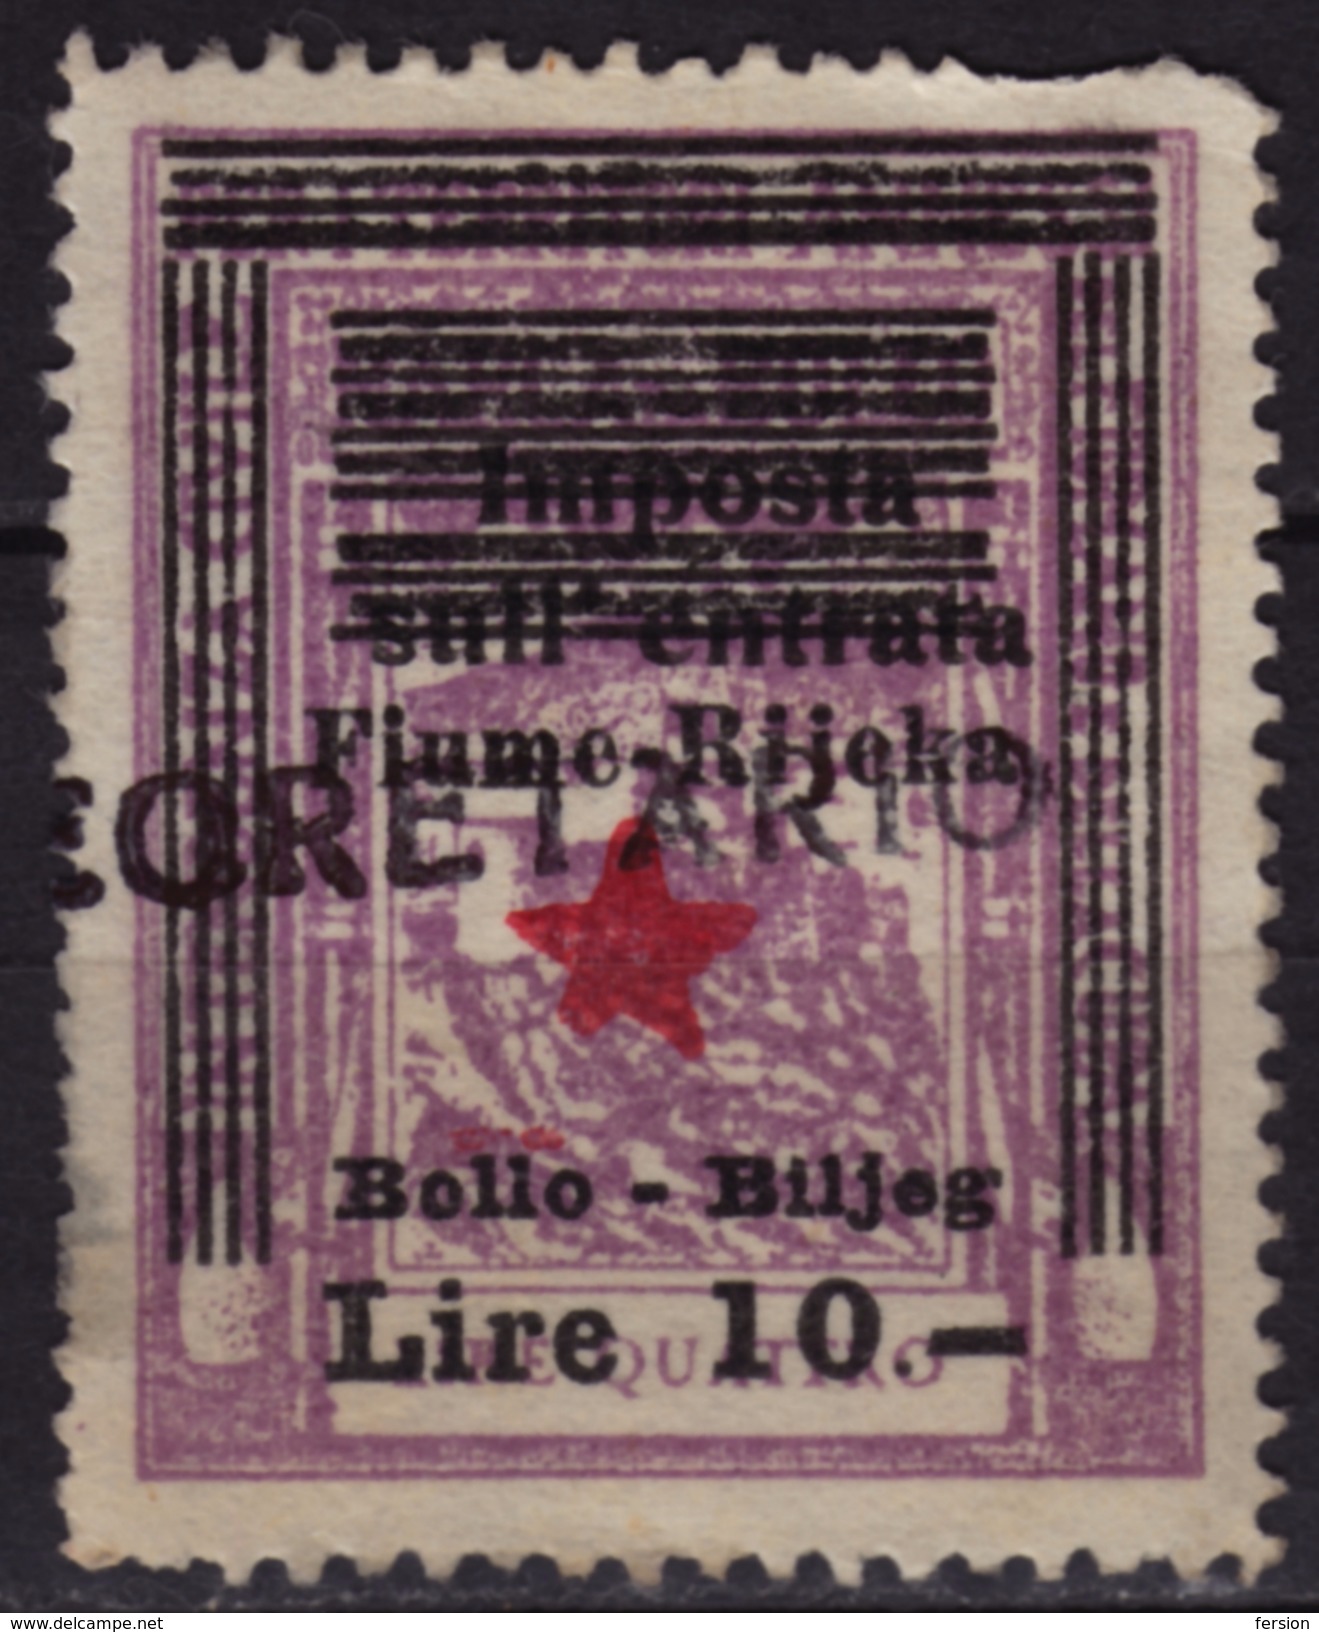 1945 - Istria Istra / Rijeka Fiume - Yugoslavia Occupation - Revenue Tax Stamp - Overprint - Occ. Yougoslave: Istria